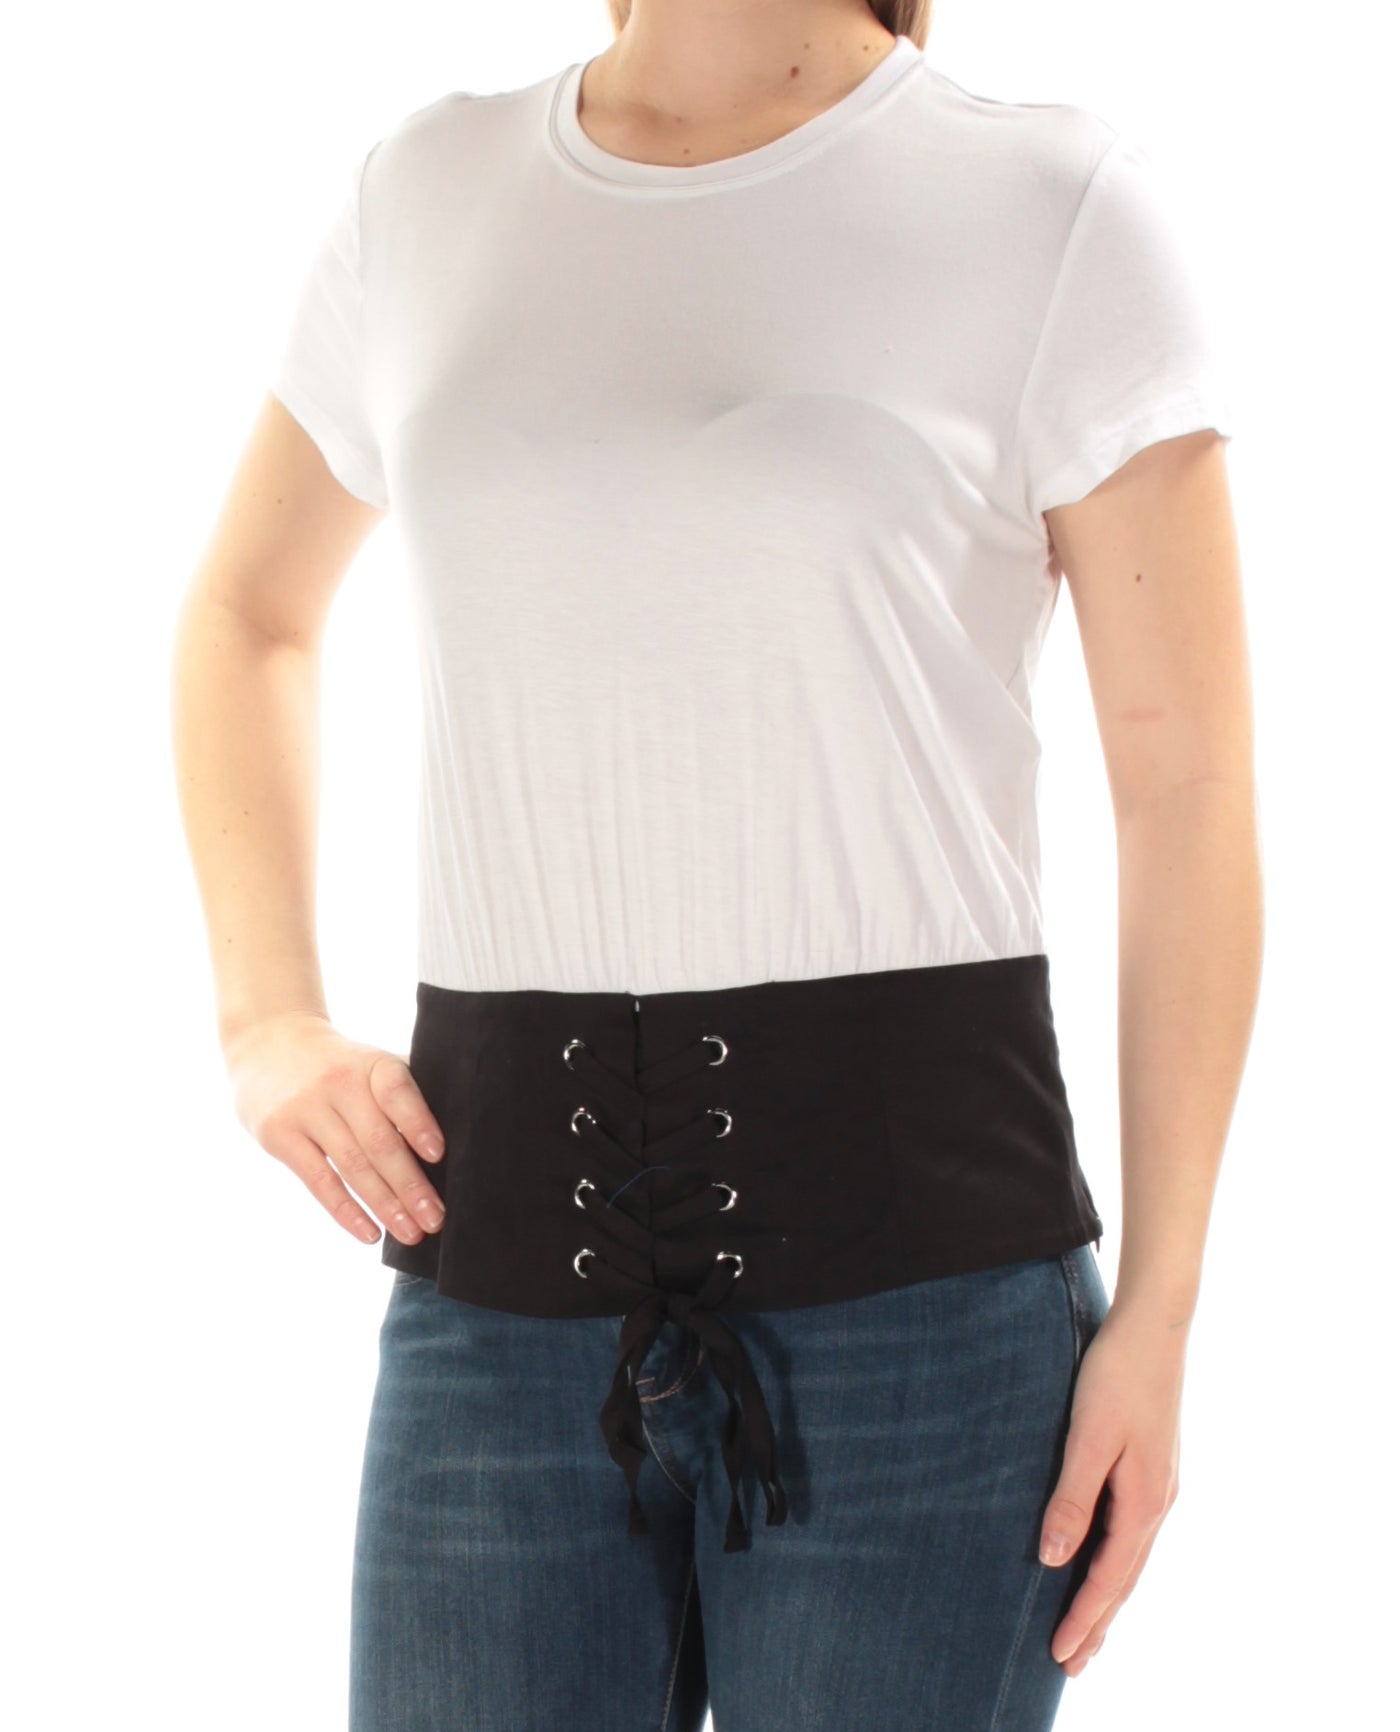 INC Womens Black Tie Color Block Short Sleeve Jewel Neck T-Shirt